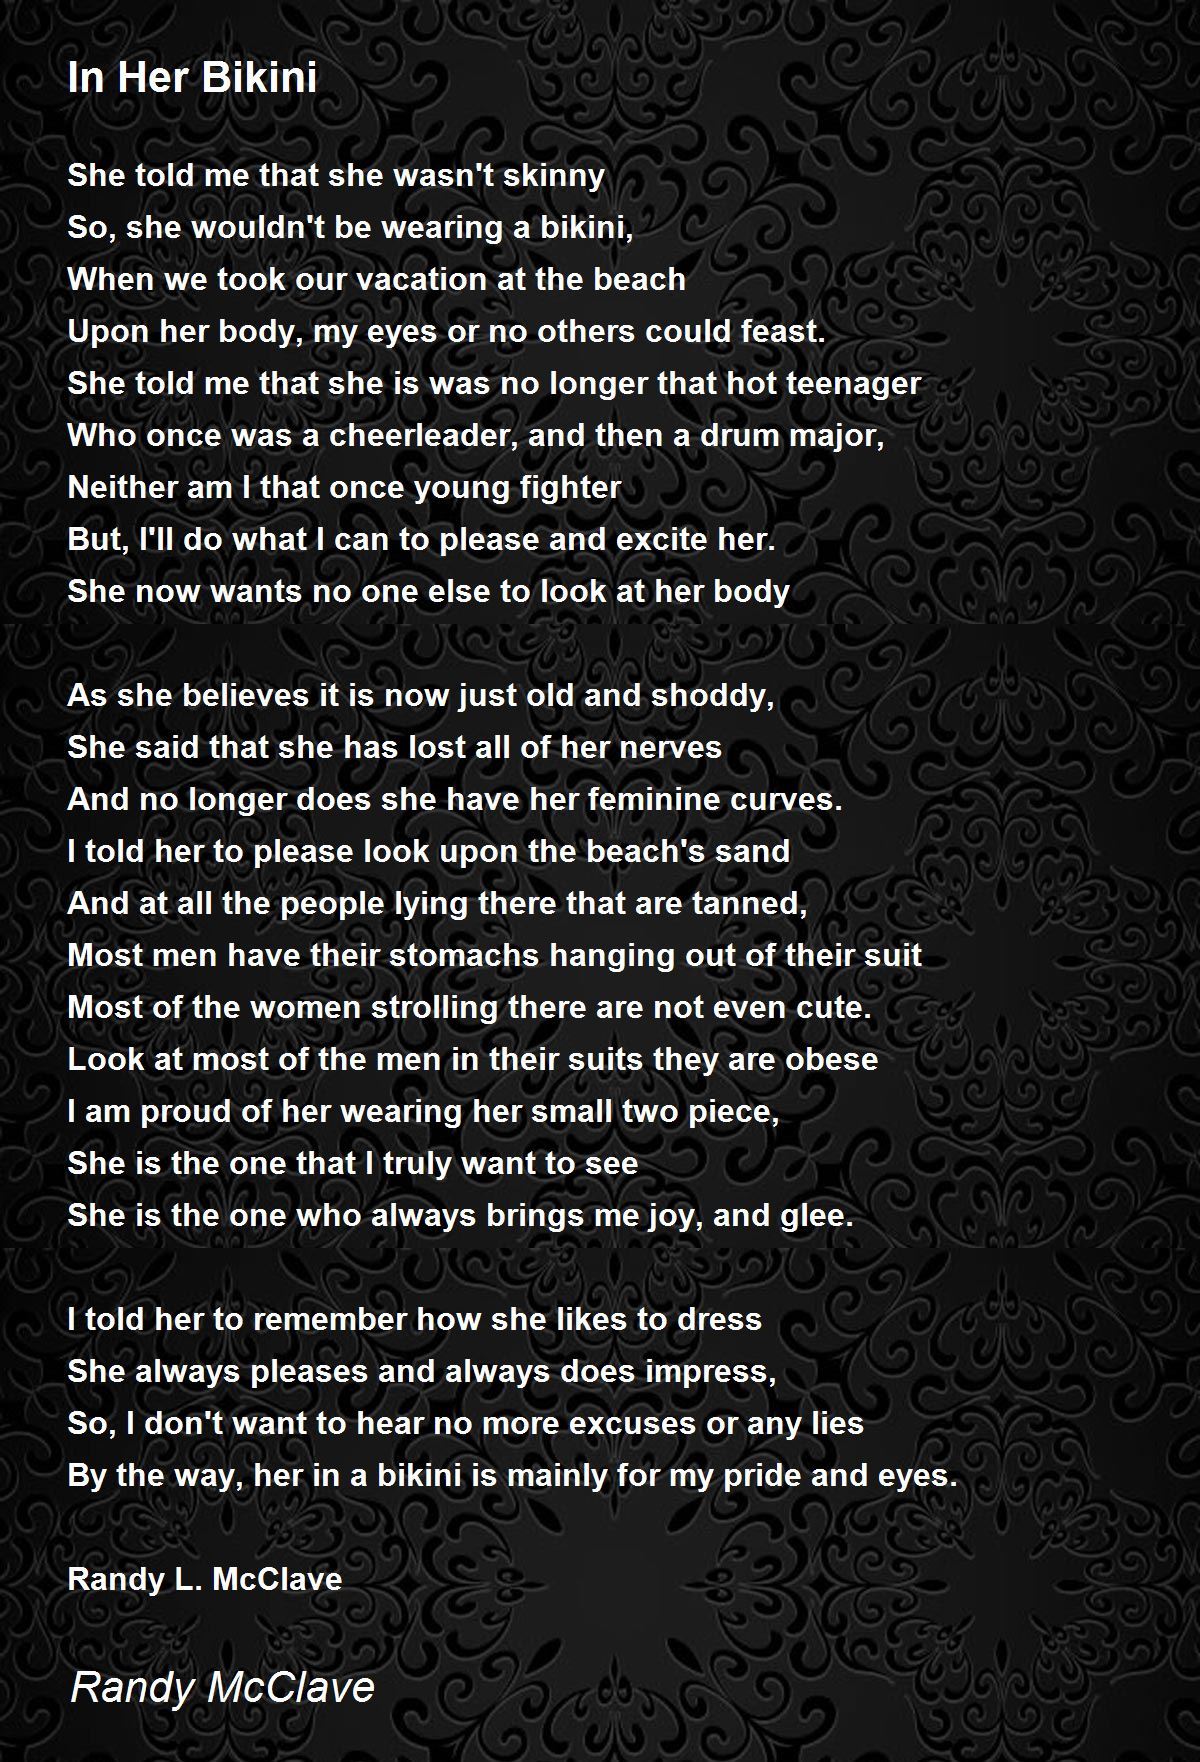 A Woman's Curve - A Woman's Curve Poem by Randy McClave